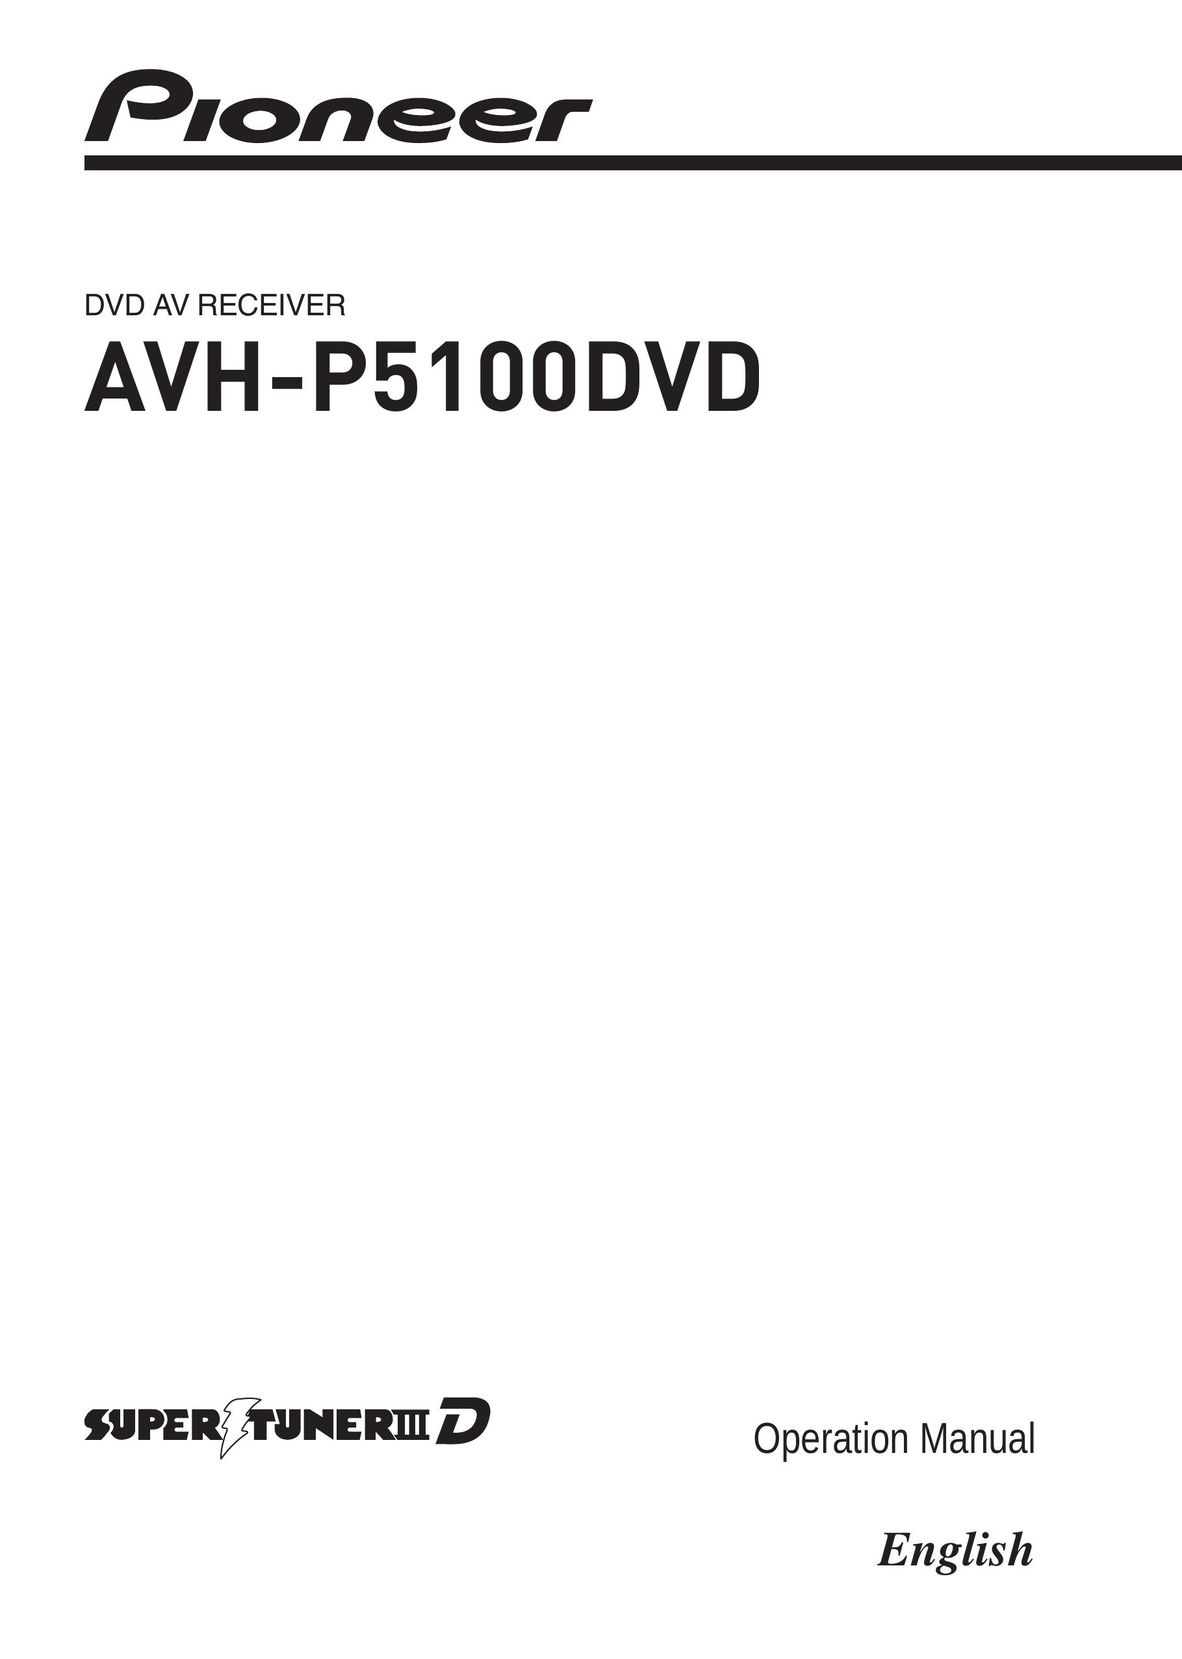 Pioneer AVH-P5100DVD DVD Player User Manual